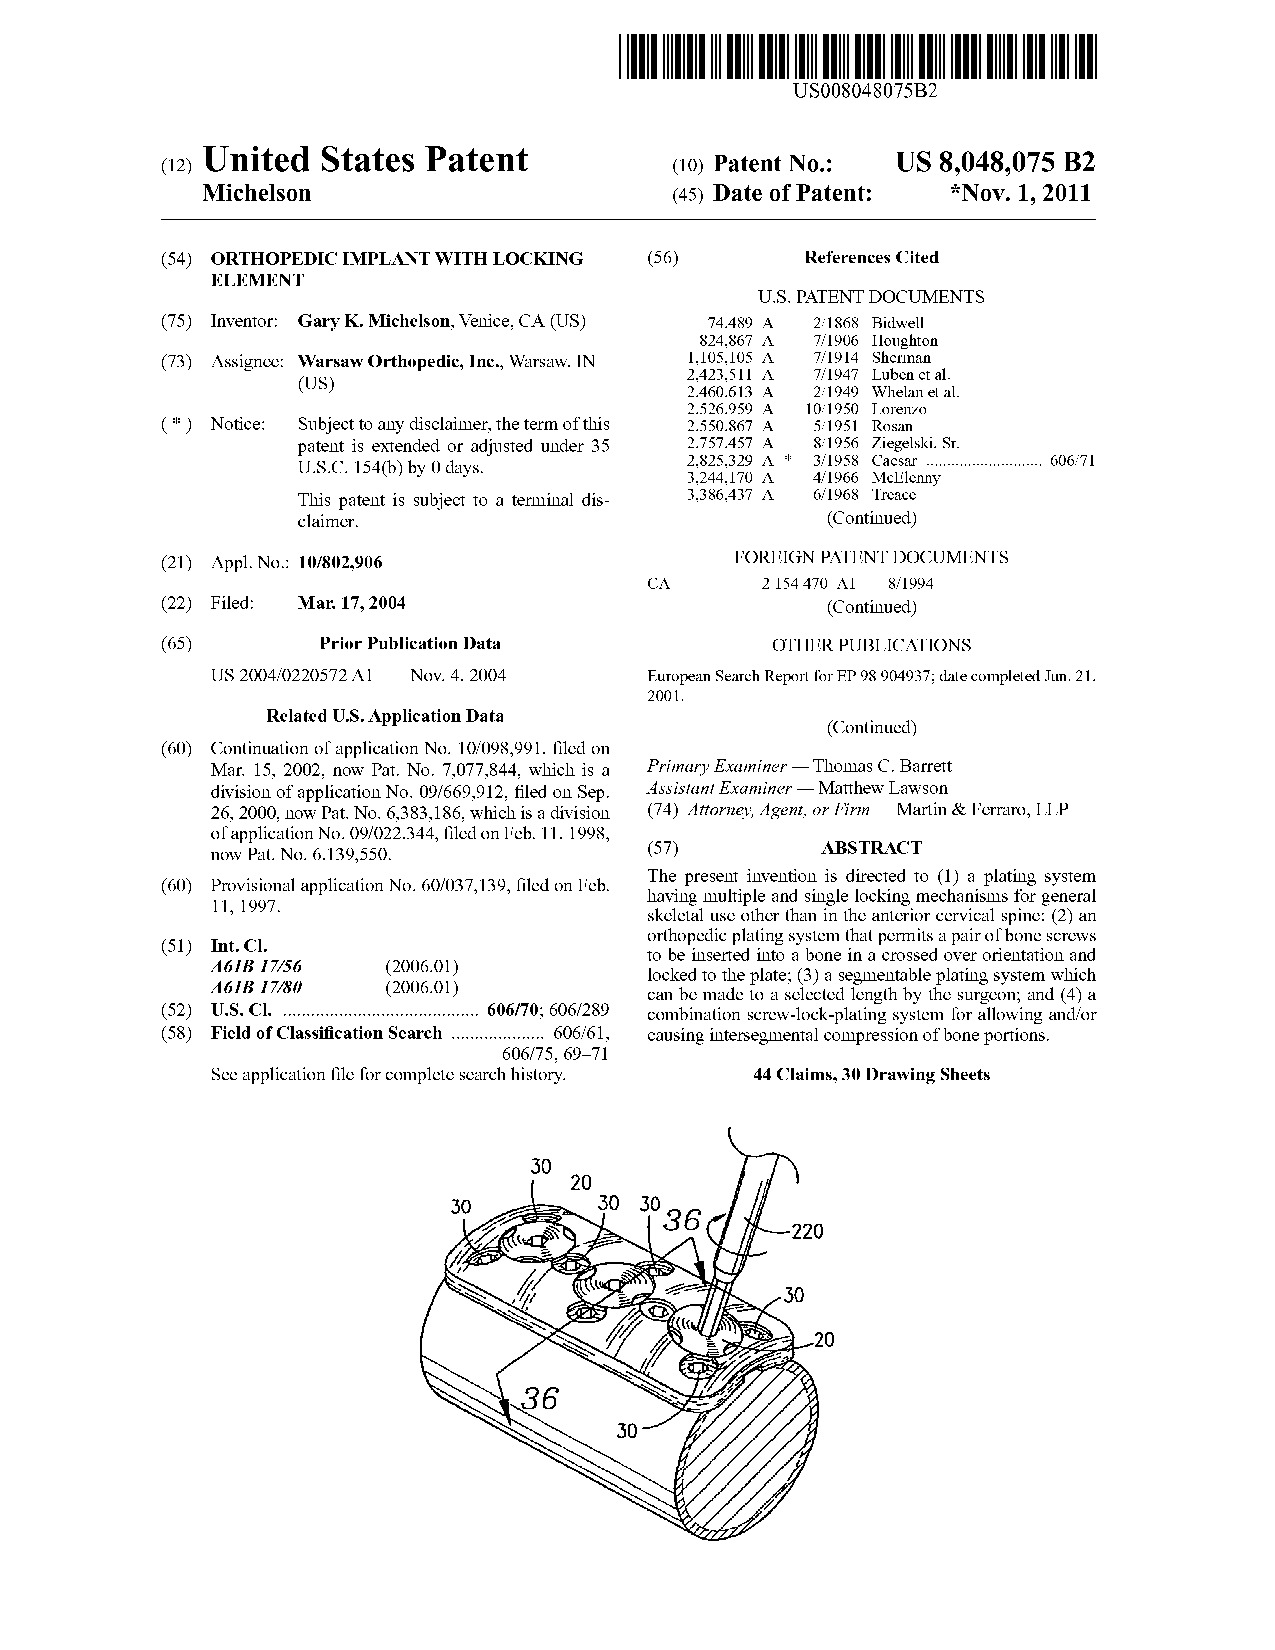 Orthopedic implant with locking element - Patent 8,048,075